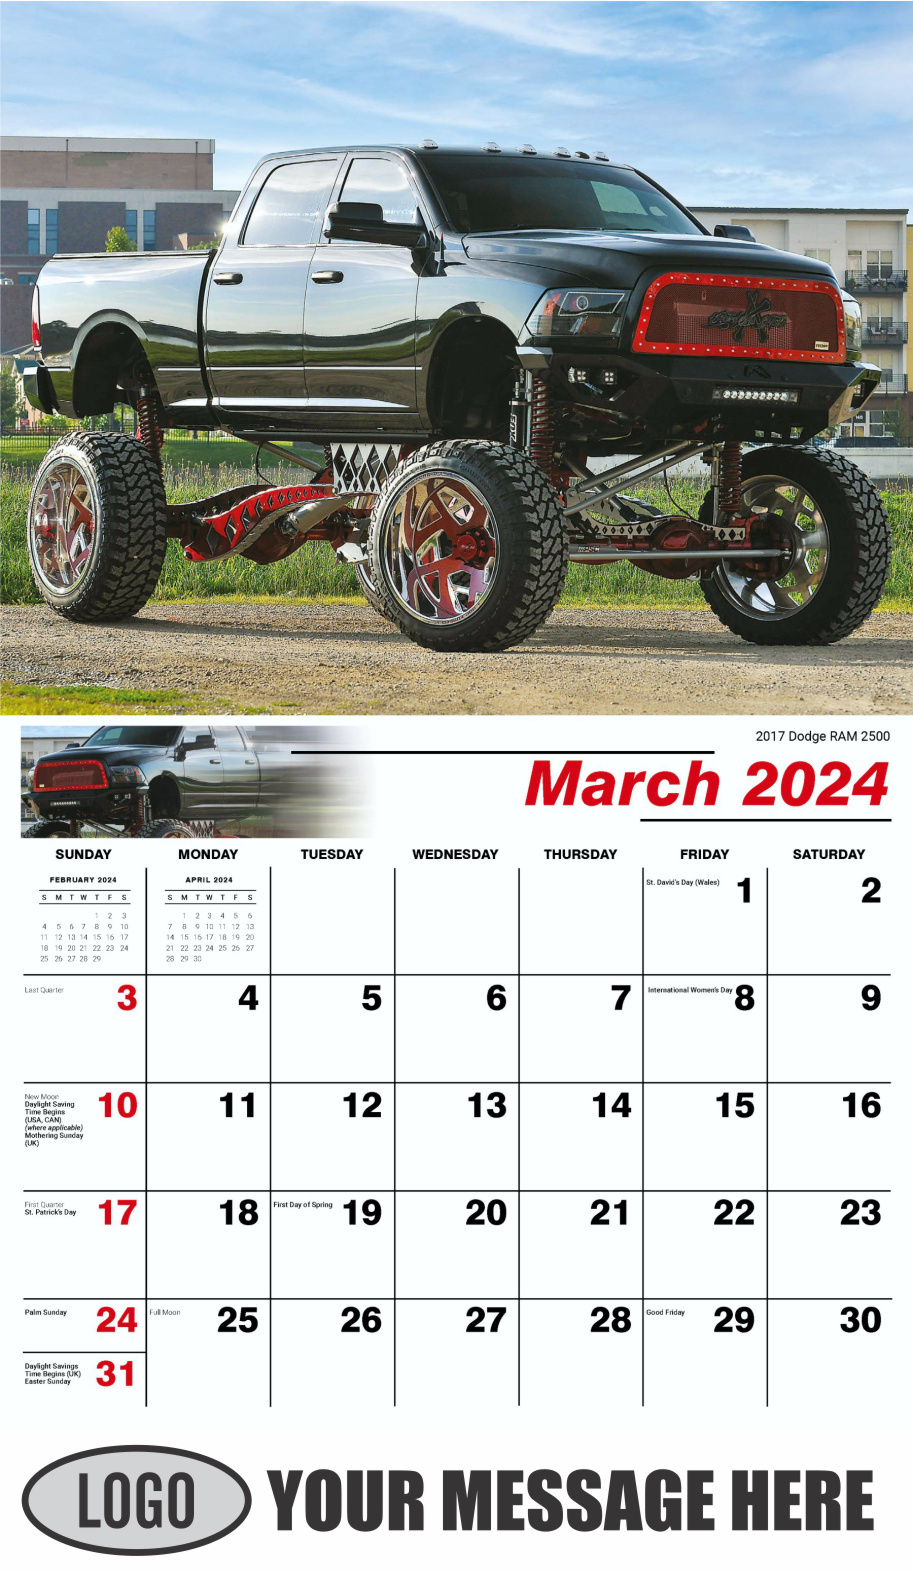 Pumped-Up Pickups 2024 Automotive Business Promo Calendar - March